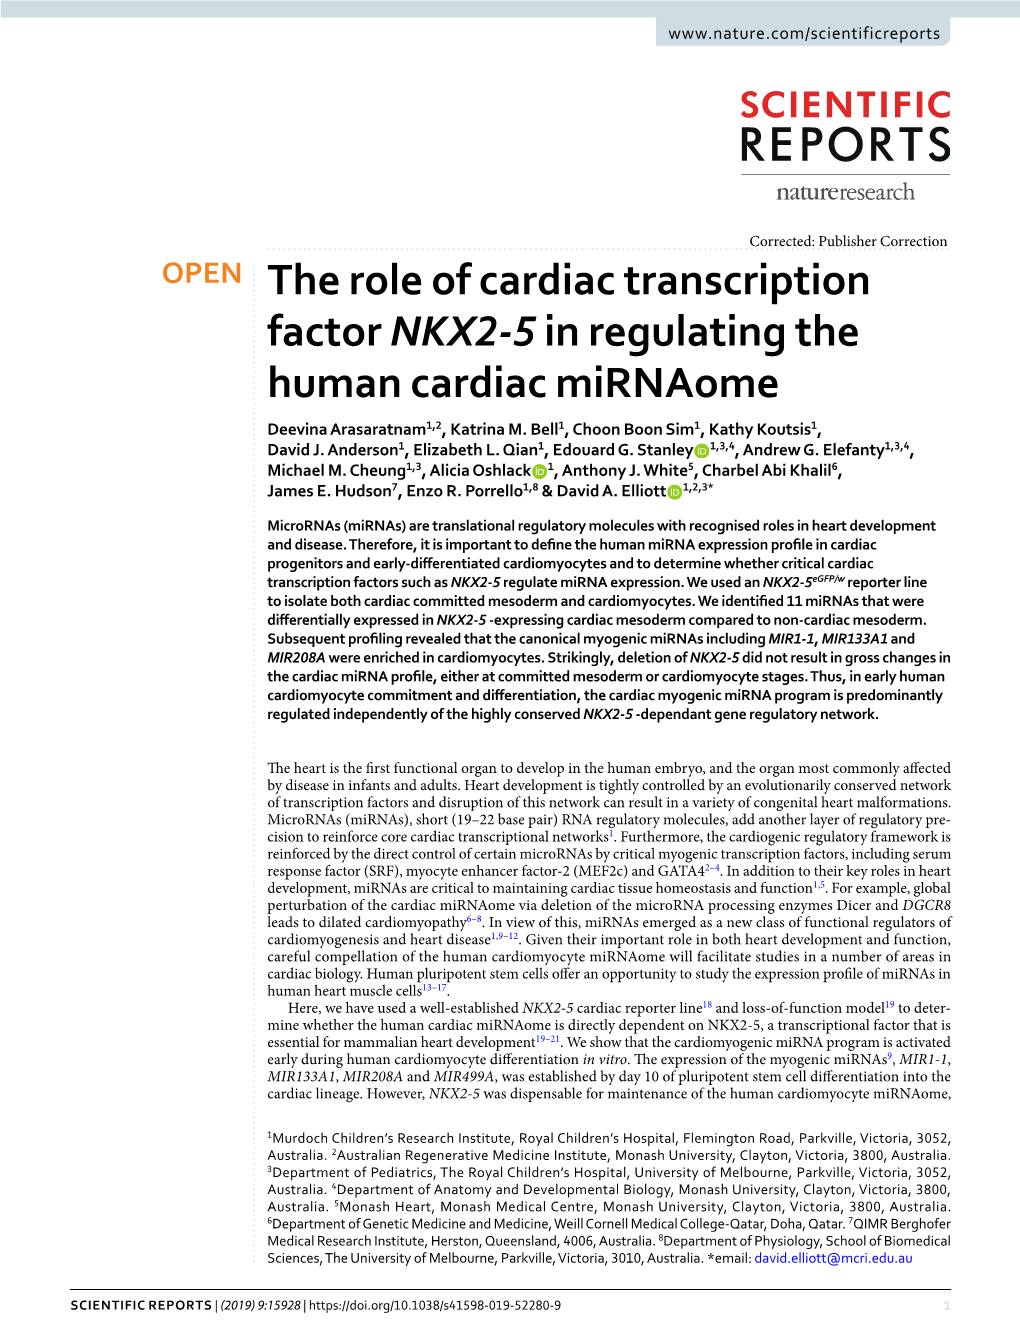 The Role of Cardiac Transcription Factor NKX2-5 in Regulating the Human Cardiac Mirnaome Deevina Arasaratnam1,2, Katrina M